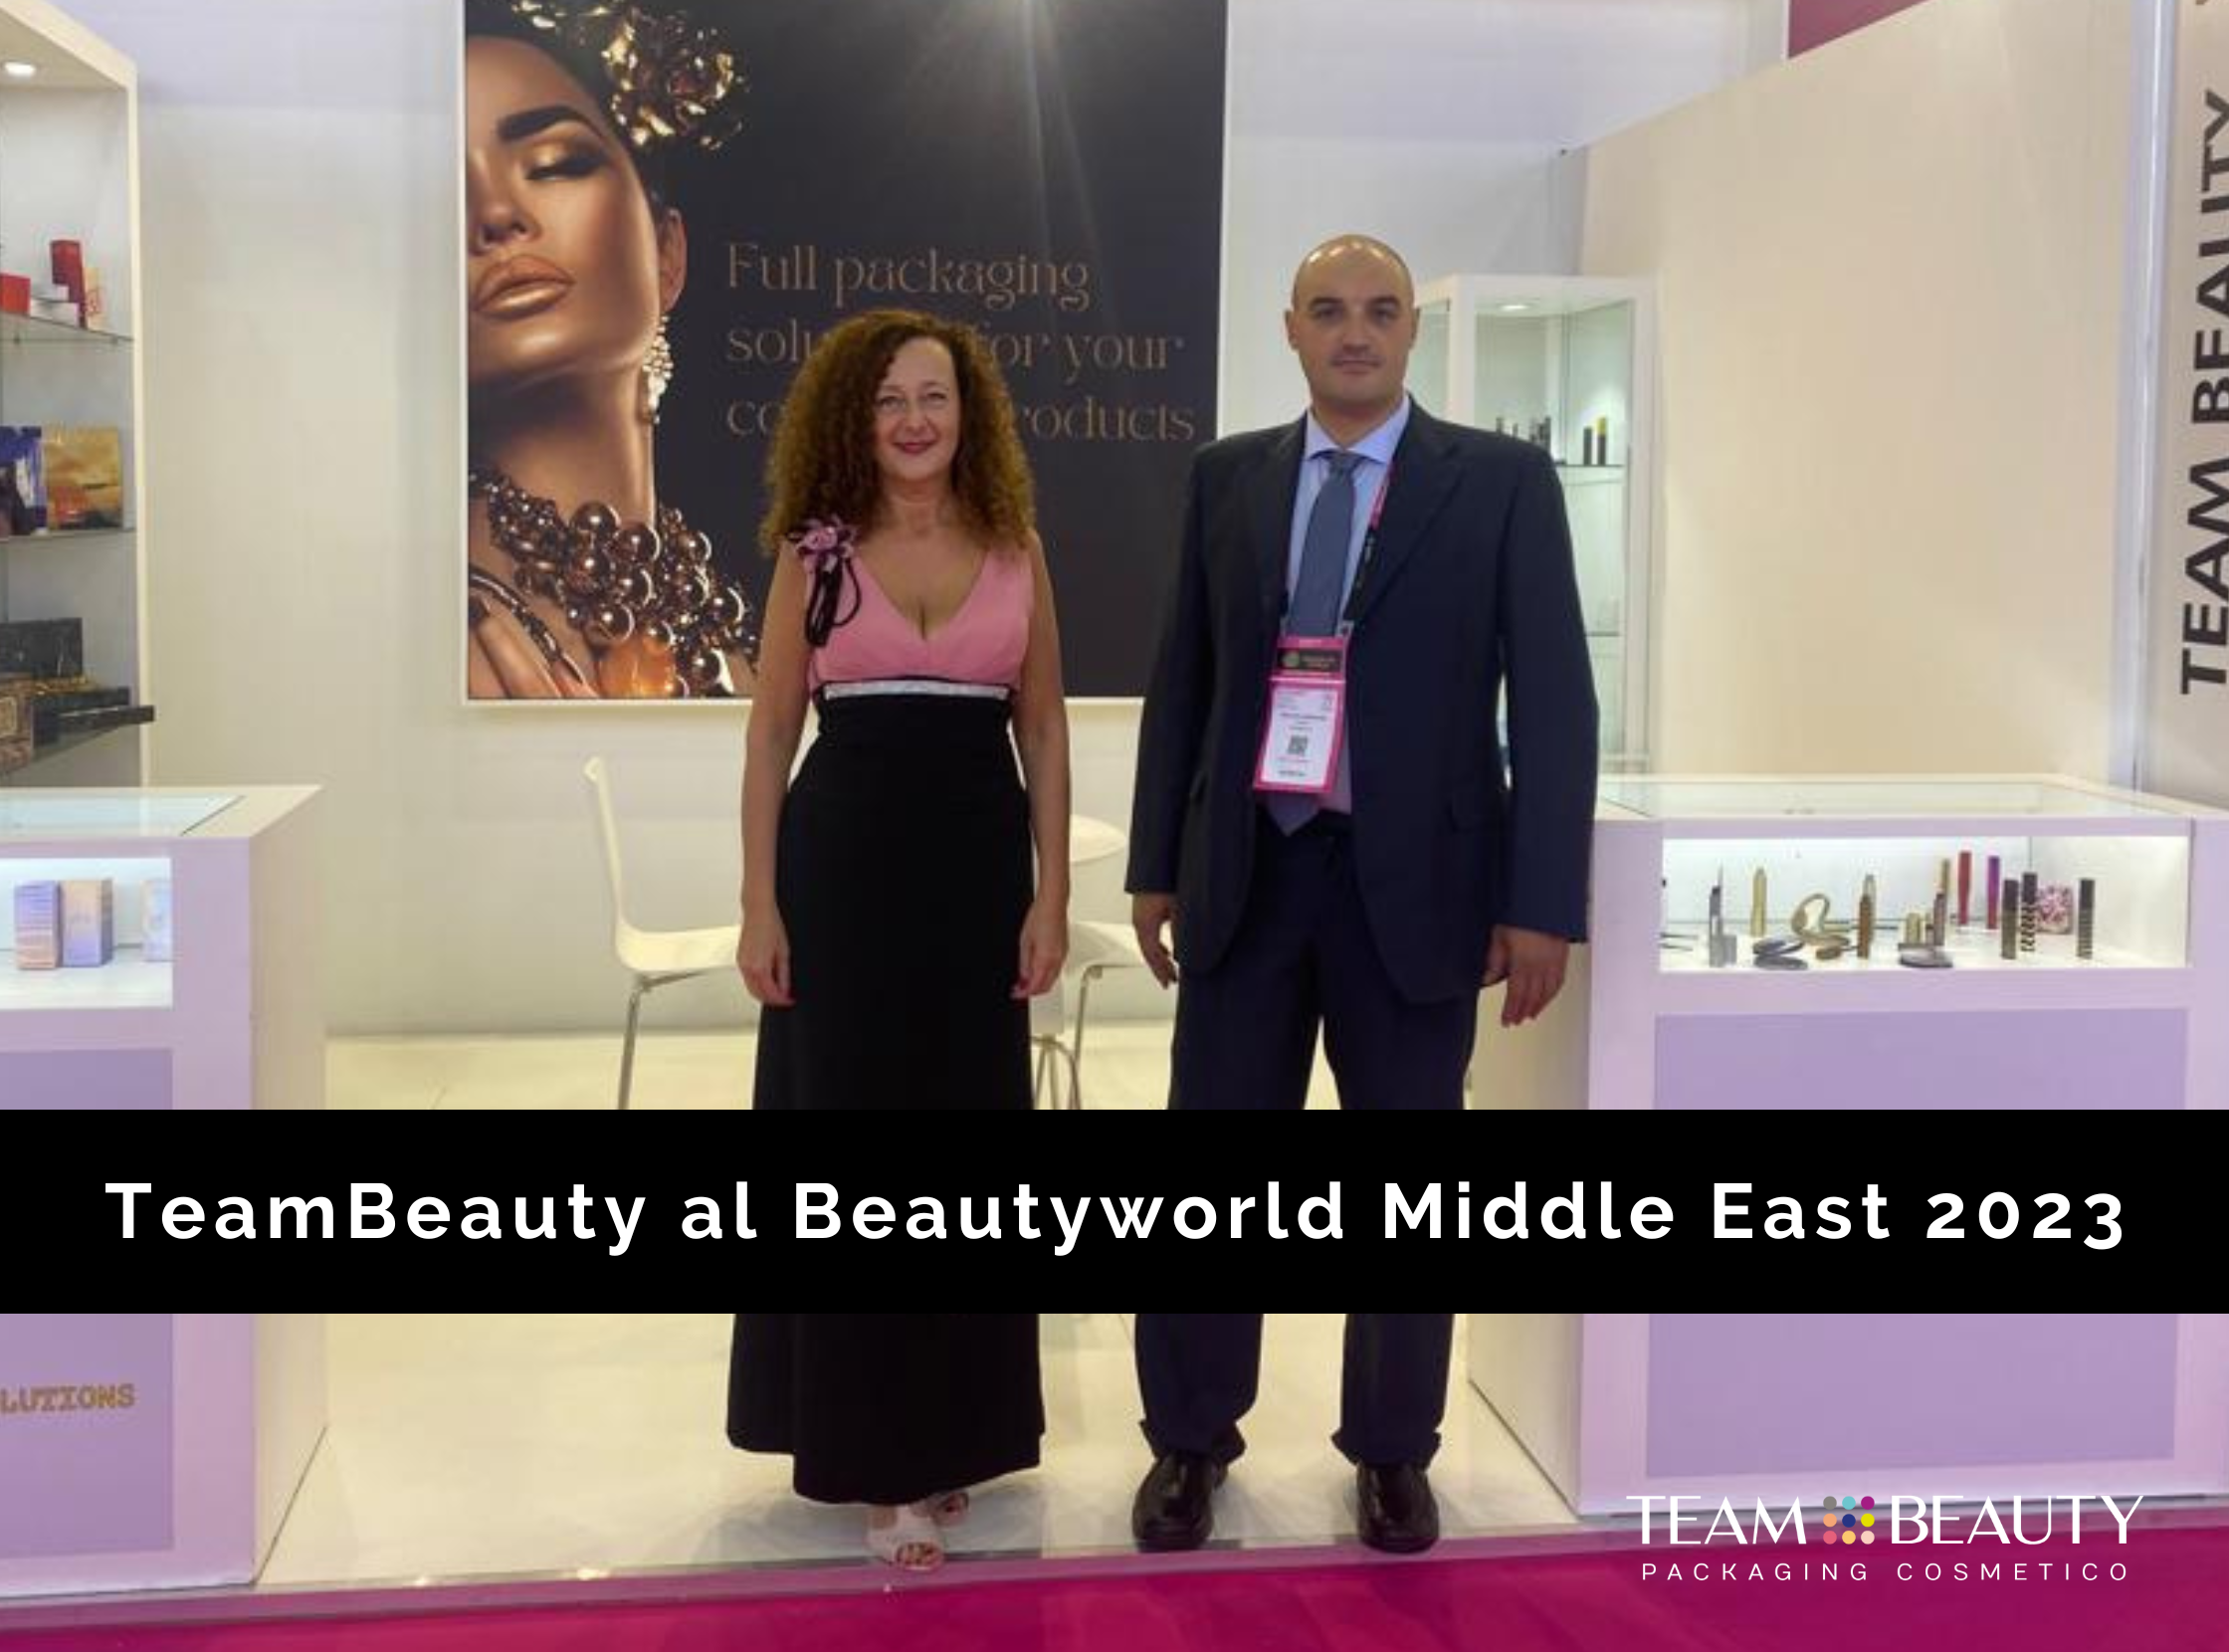 TeamBeauty at Beautyworld Middle East 2023